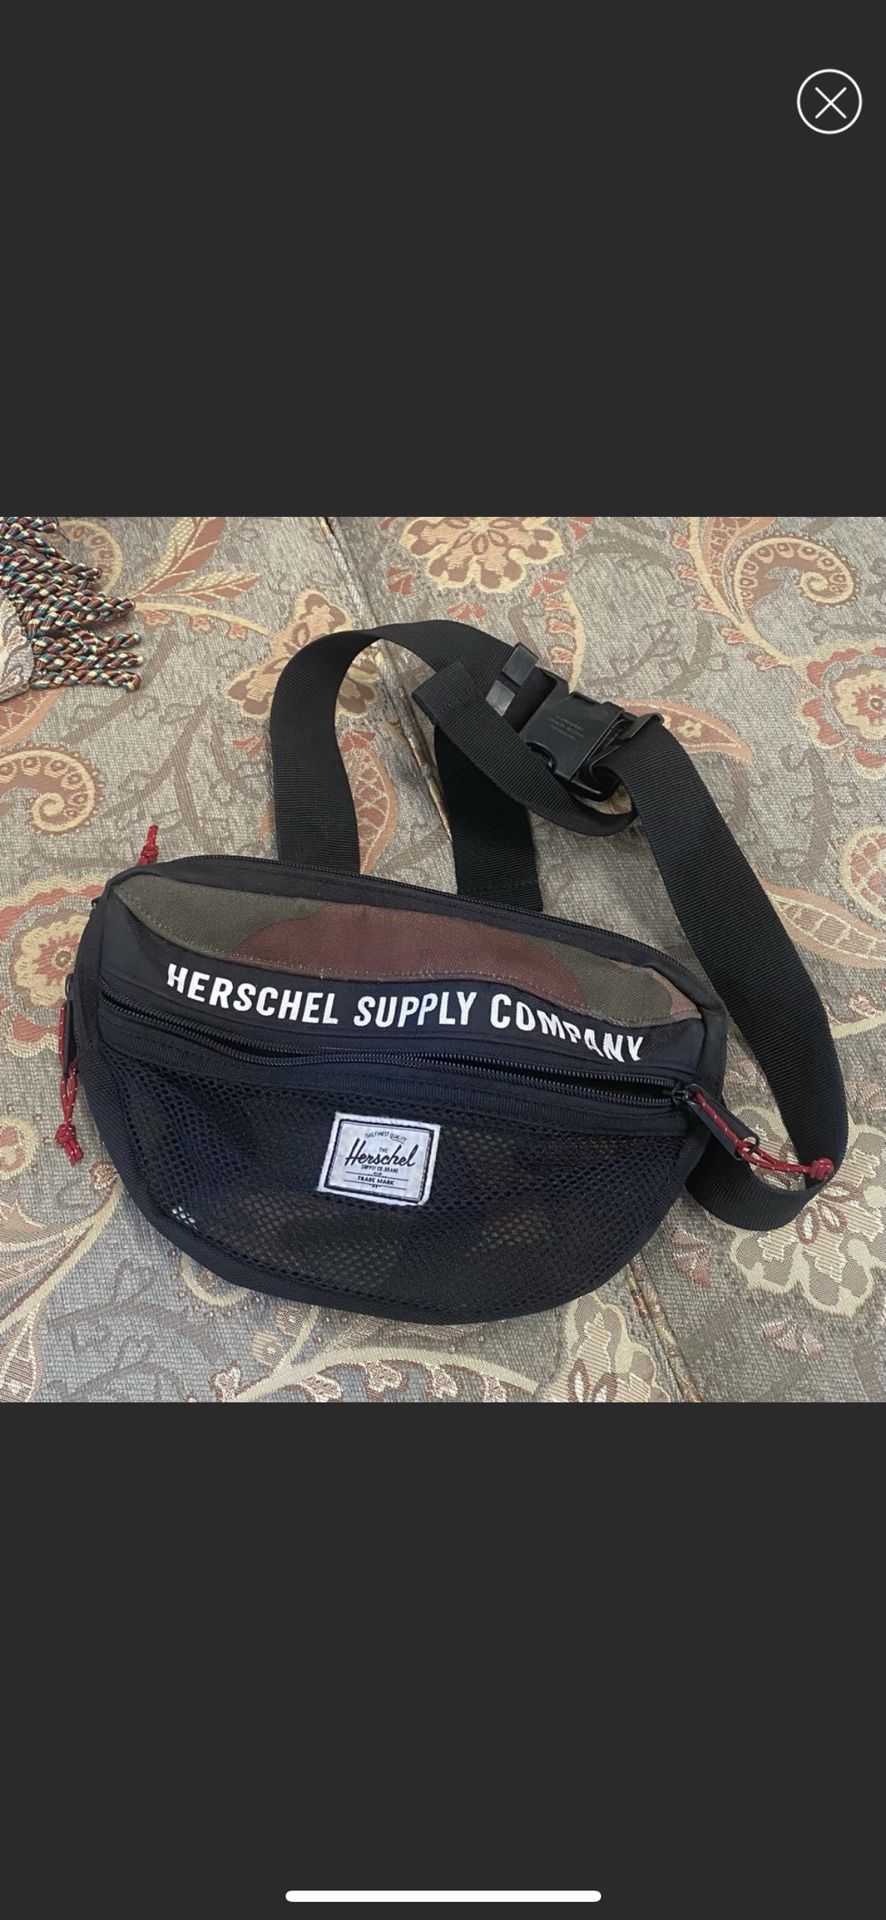 Hershel Supply Company Waist Bag Fanny Pack